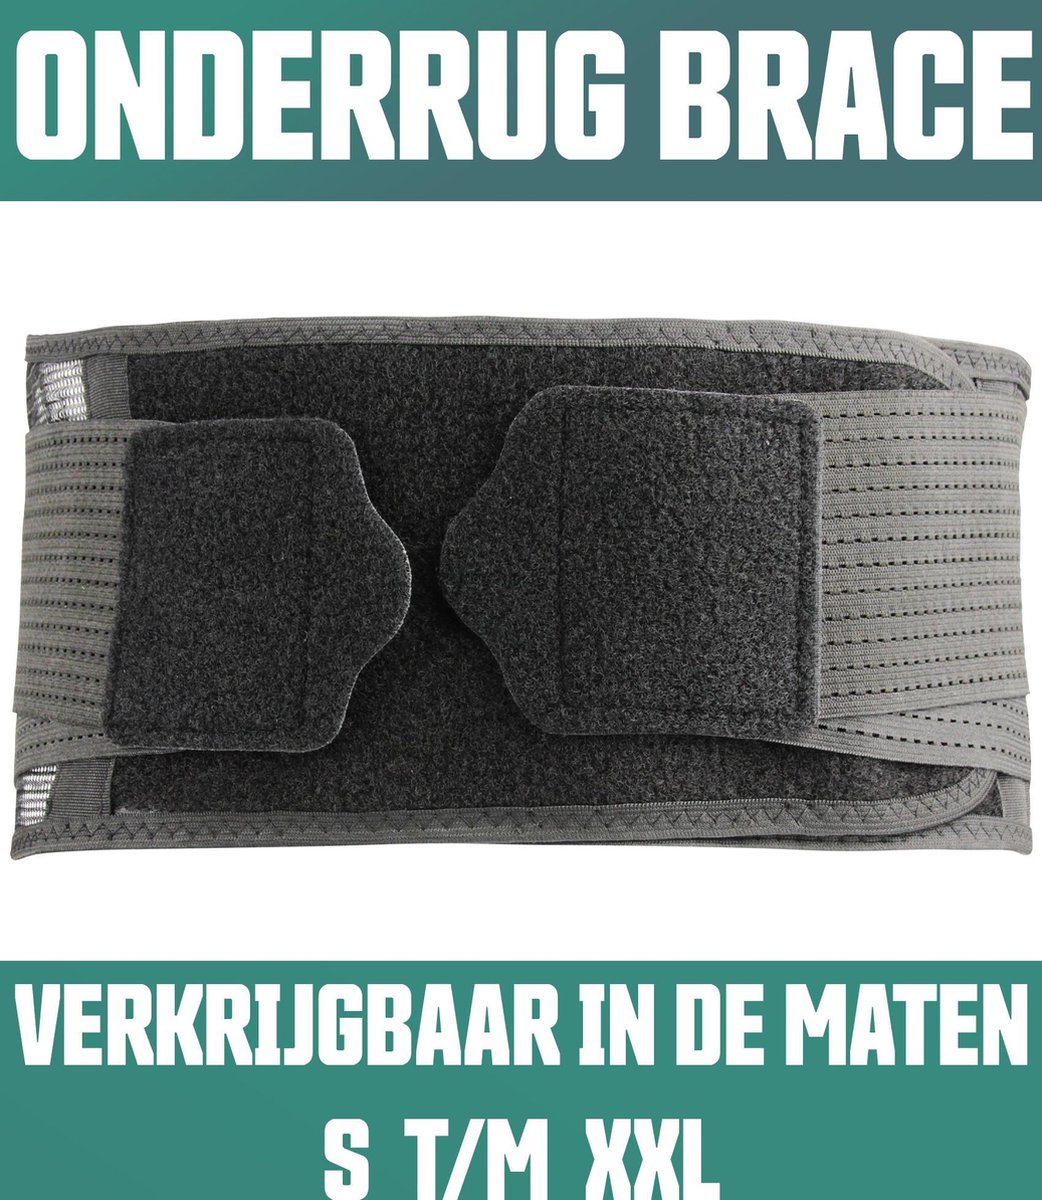 AVE Rugbrace voor Rugpijn - Maat XL - Rugband - Onderrug Brace - Rug Houding - Hernia - AVE Body